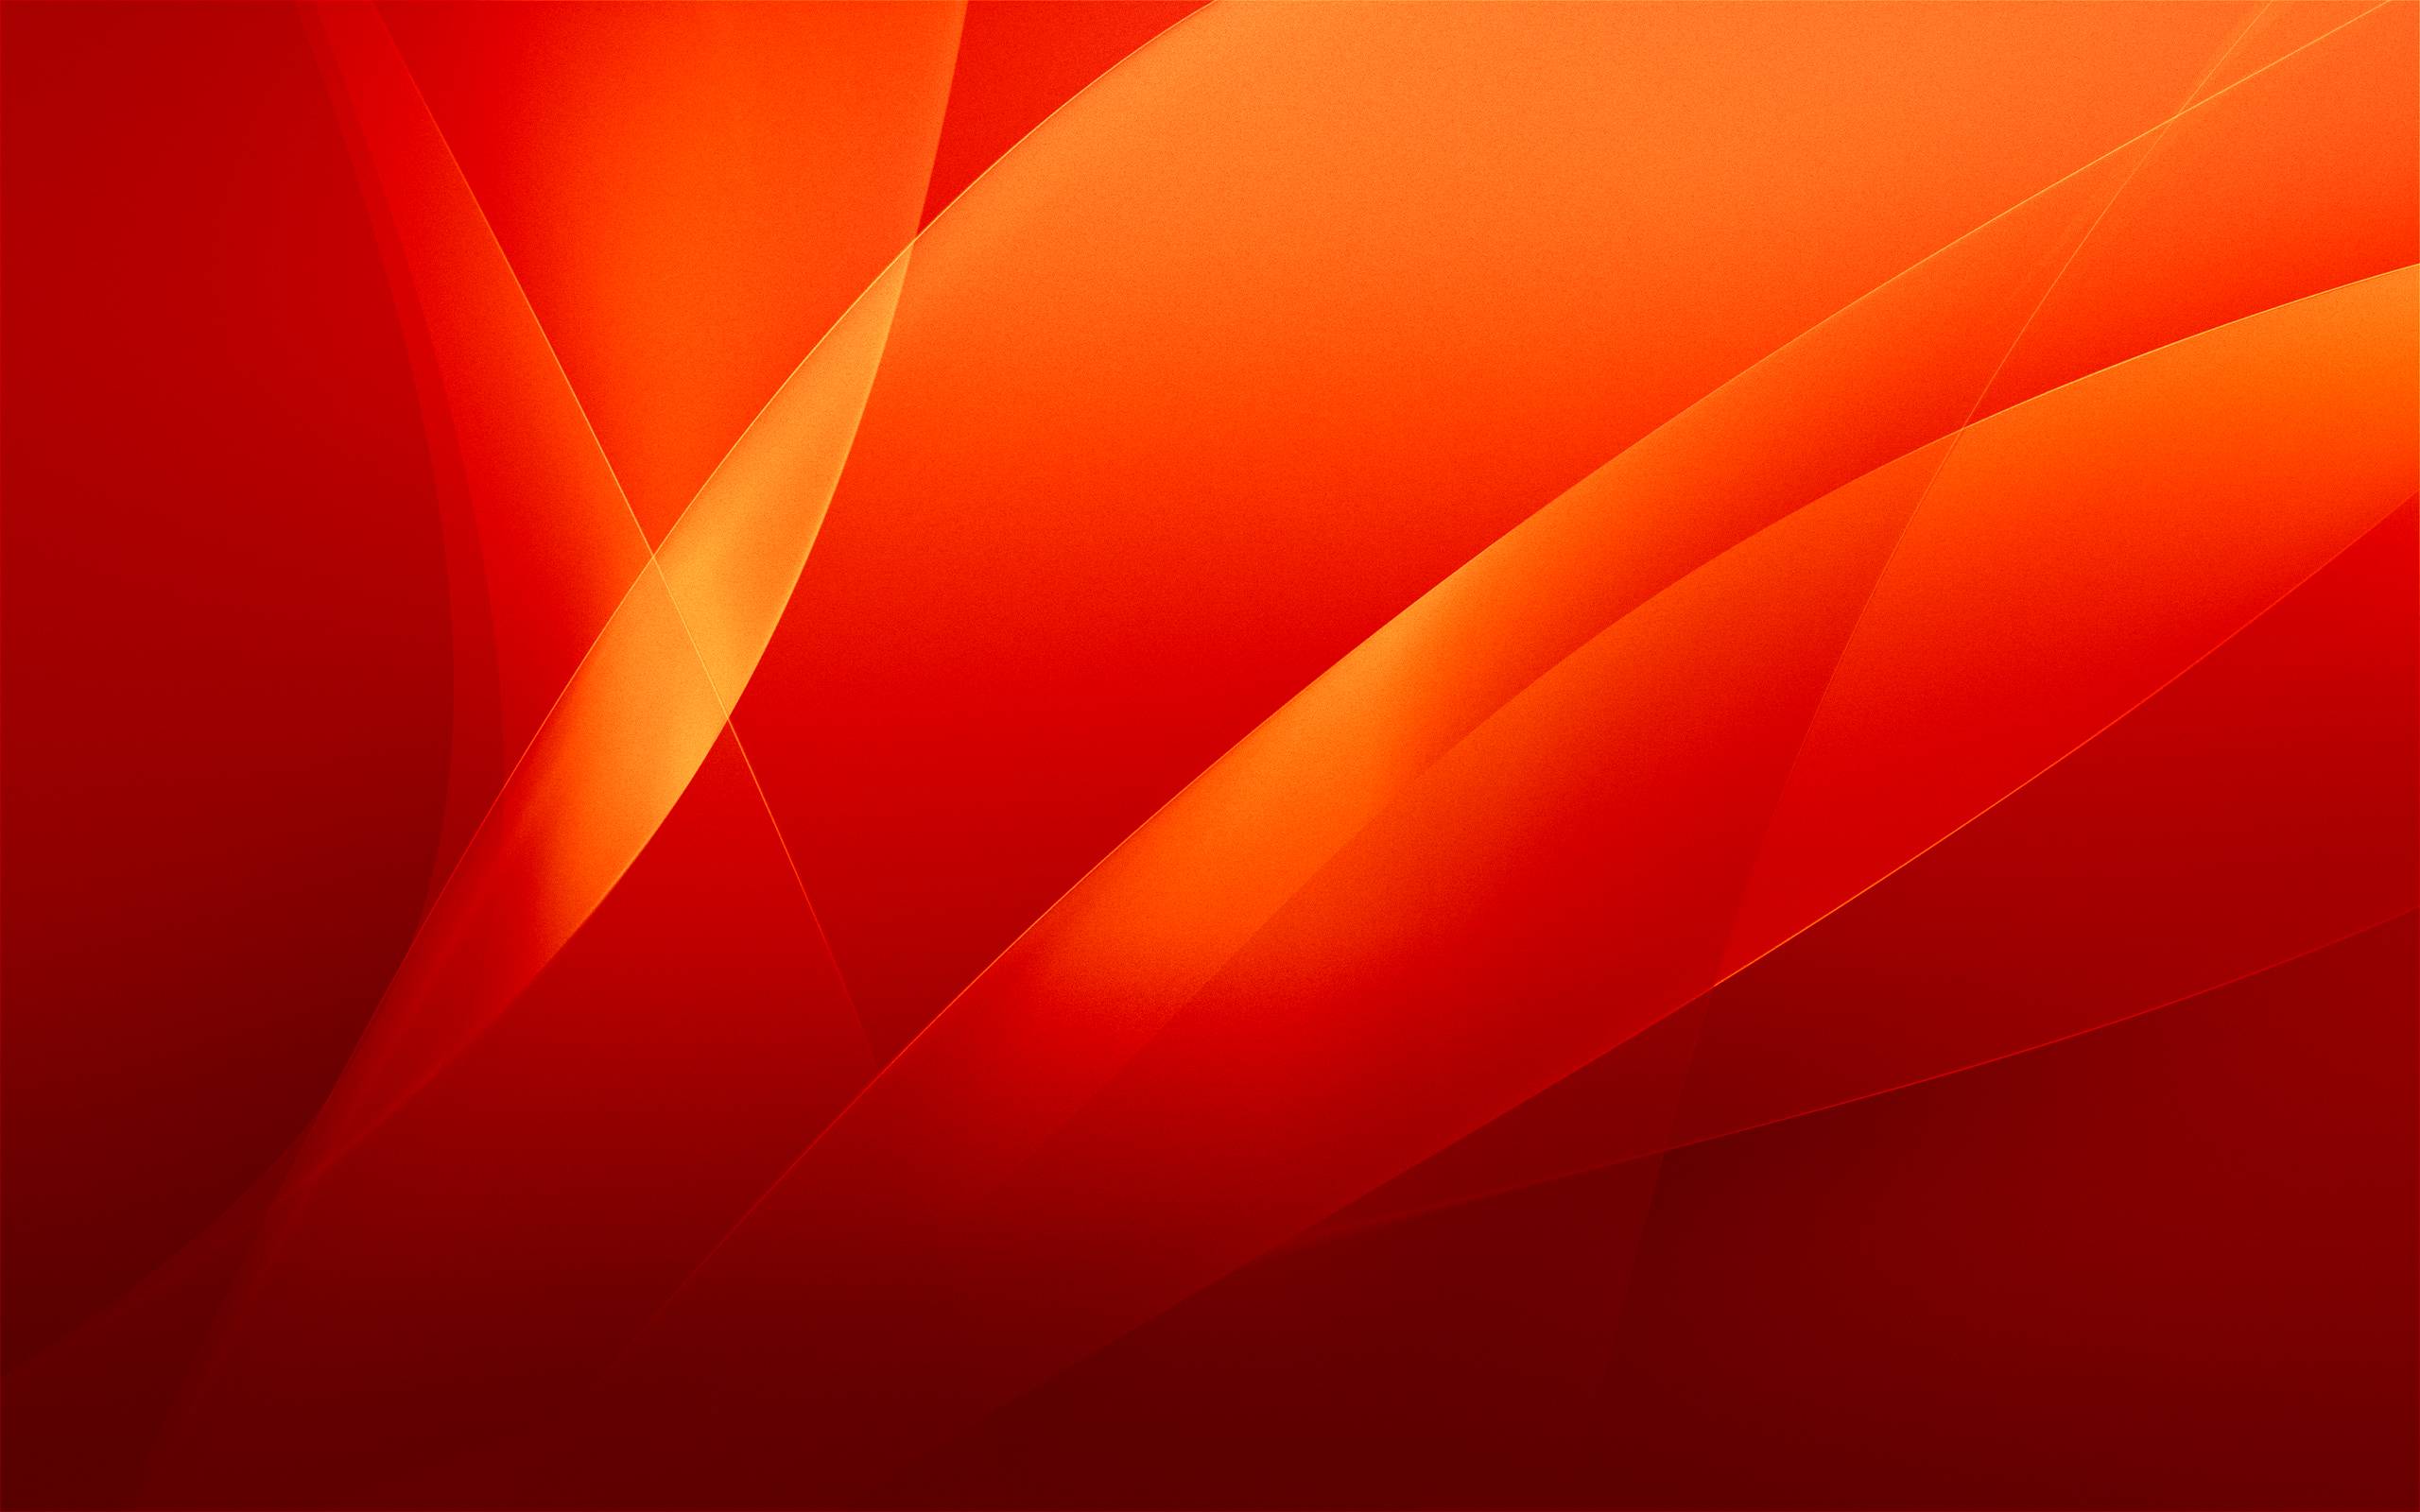 72+] Red Background Images - WallpaperSafari